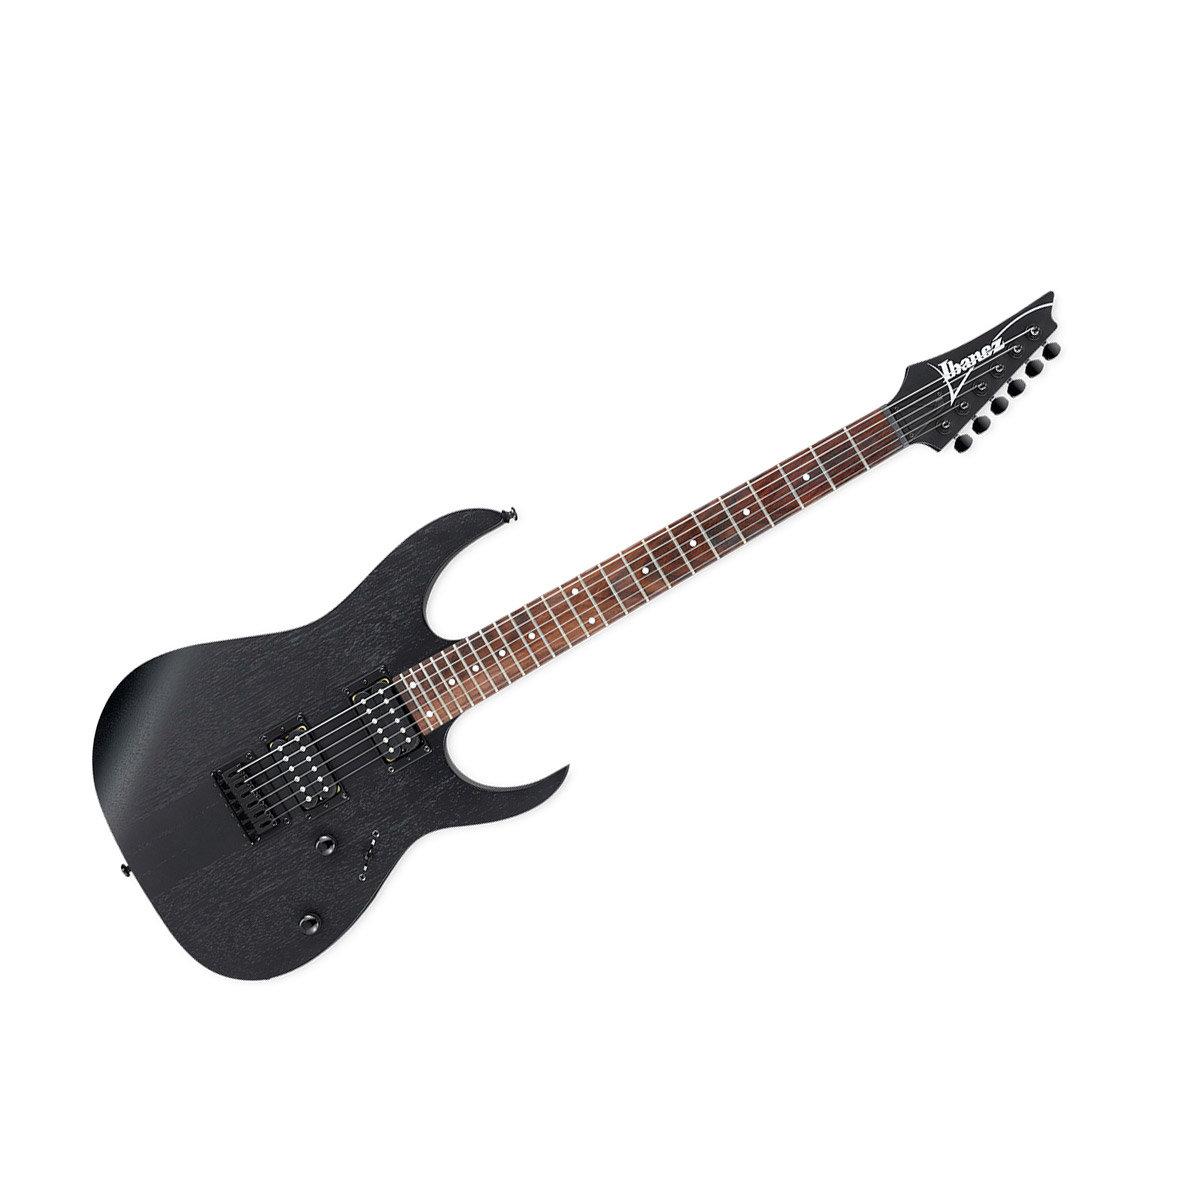 Ibañez - Guitarra Eléctrica RG, Color: Negra Mate Mod.RGRT421-WK_221